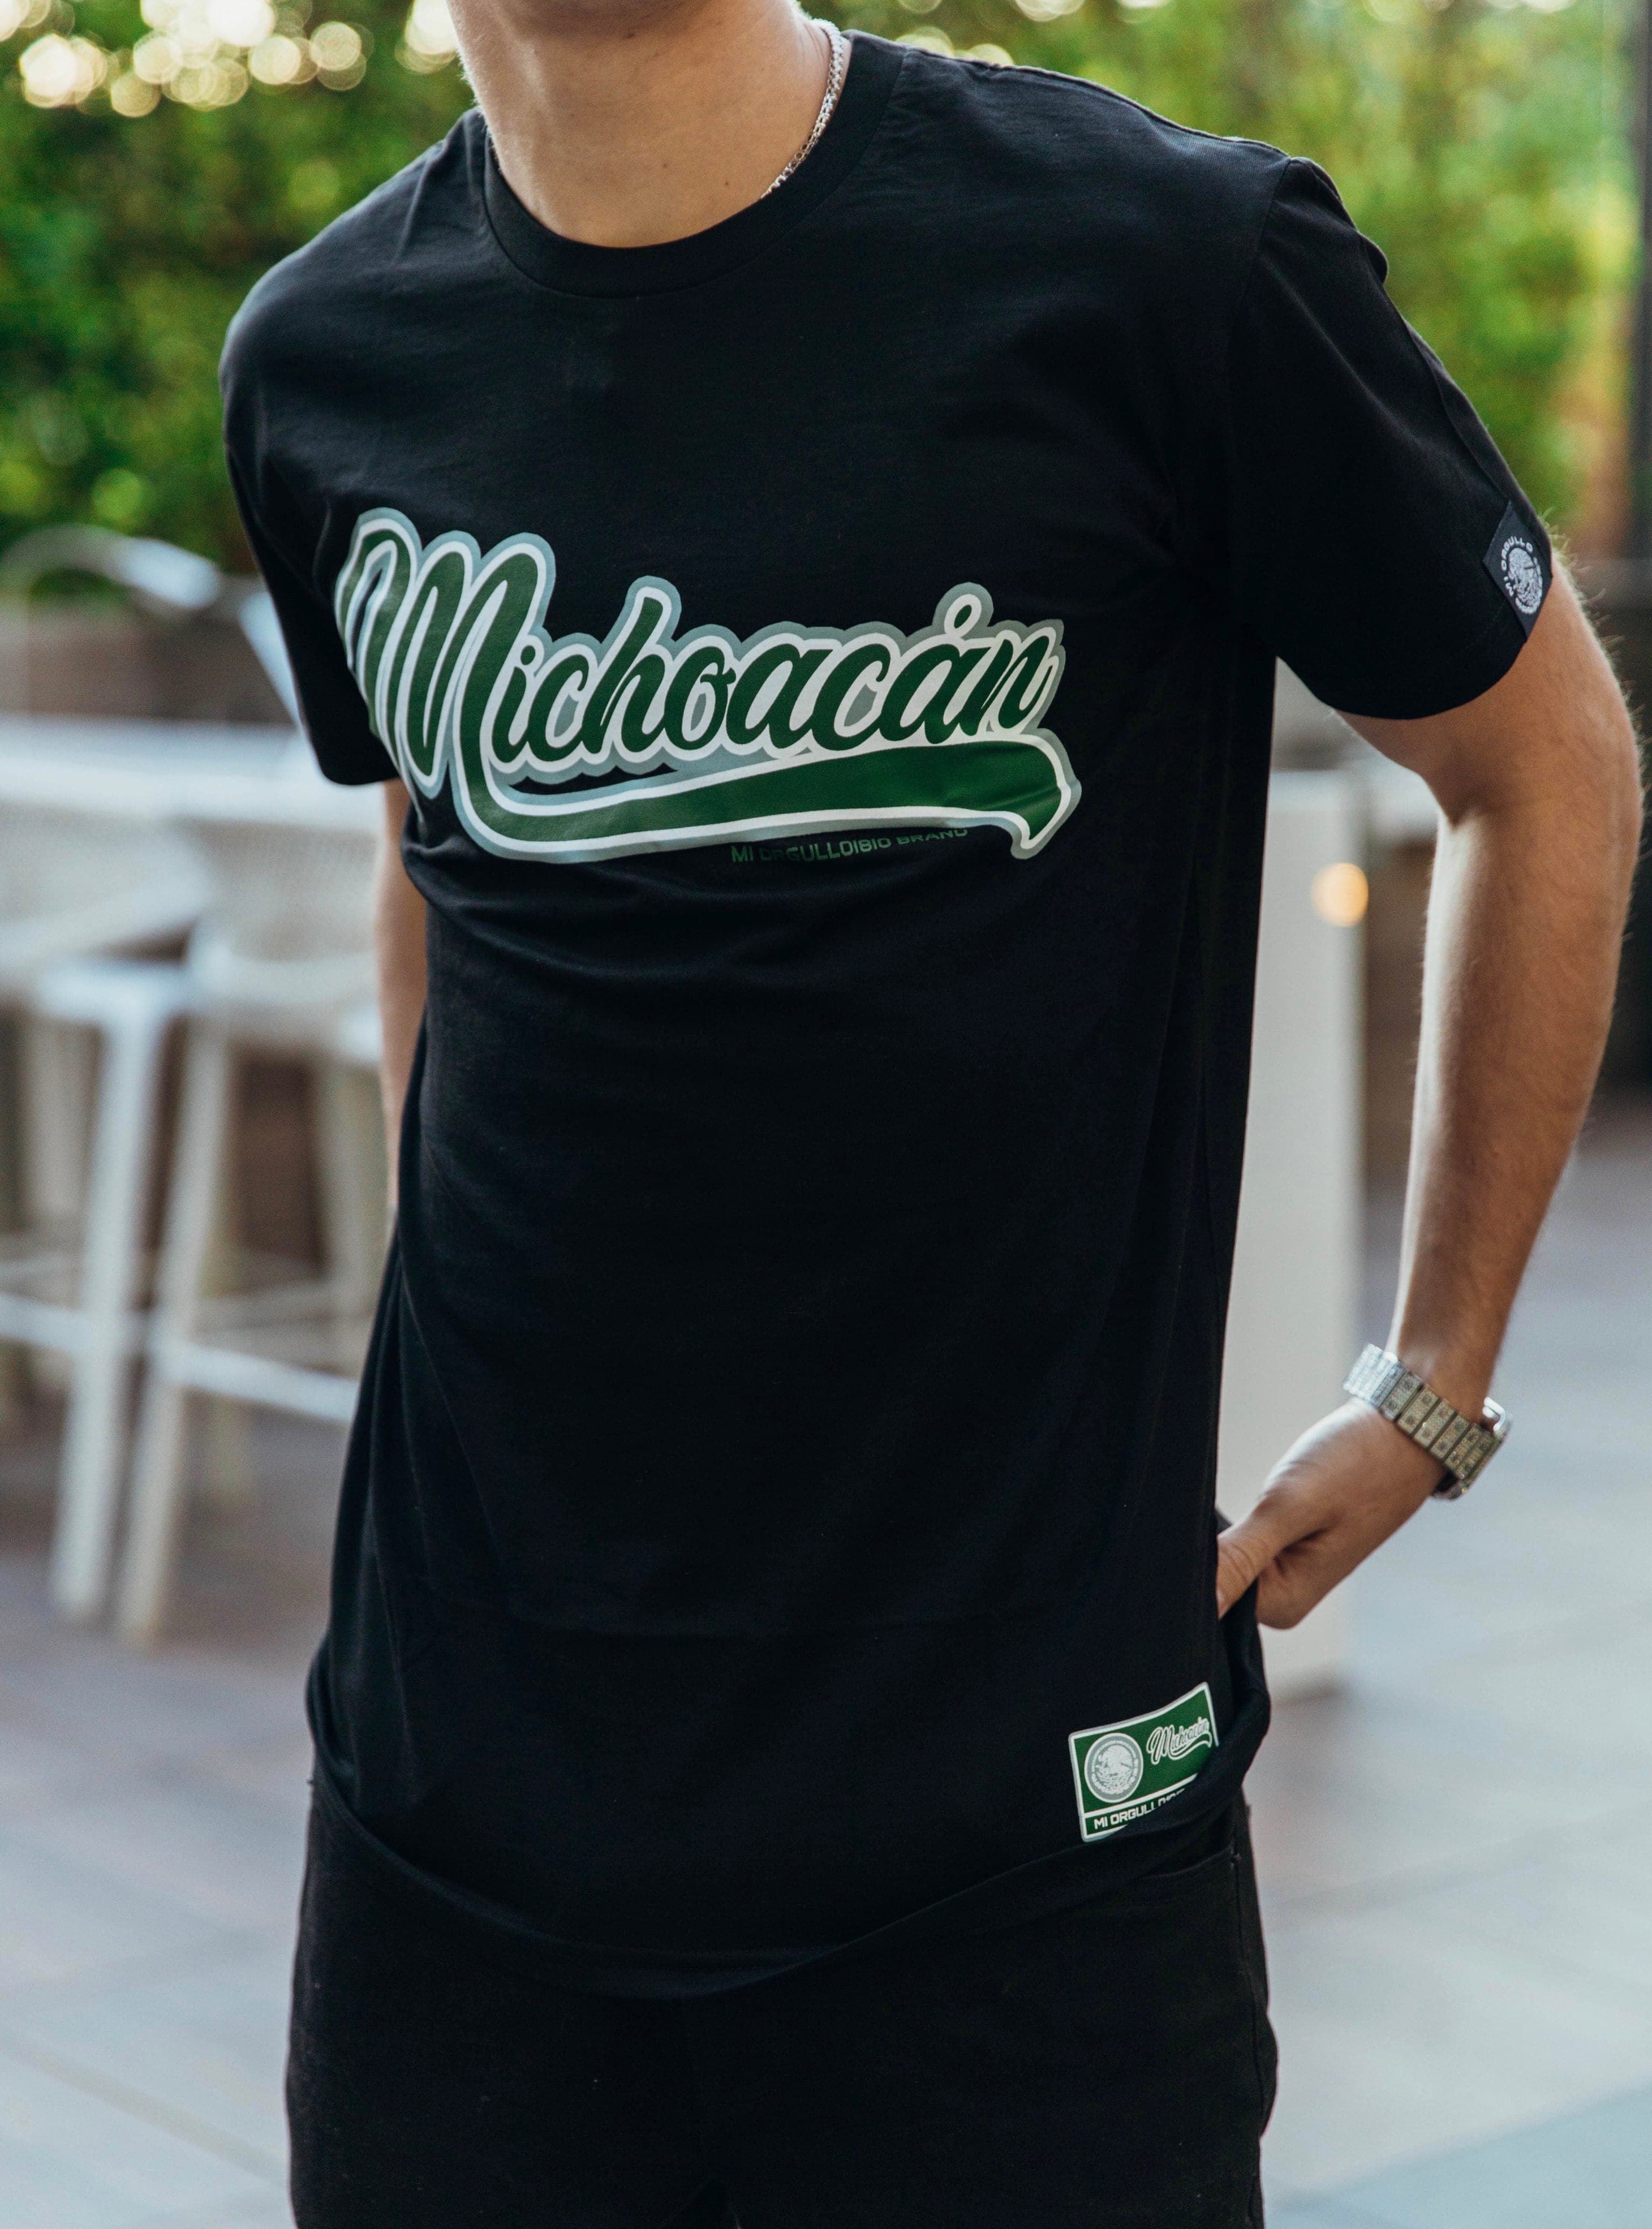 AGUACATEROS De Michoacan T-shirt Unisex -  Finland